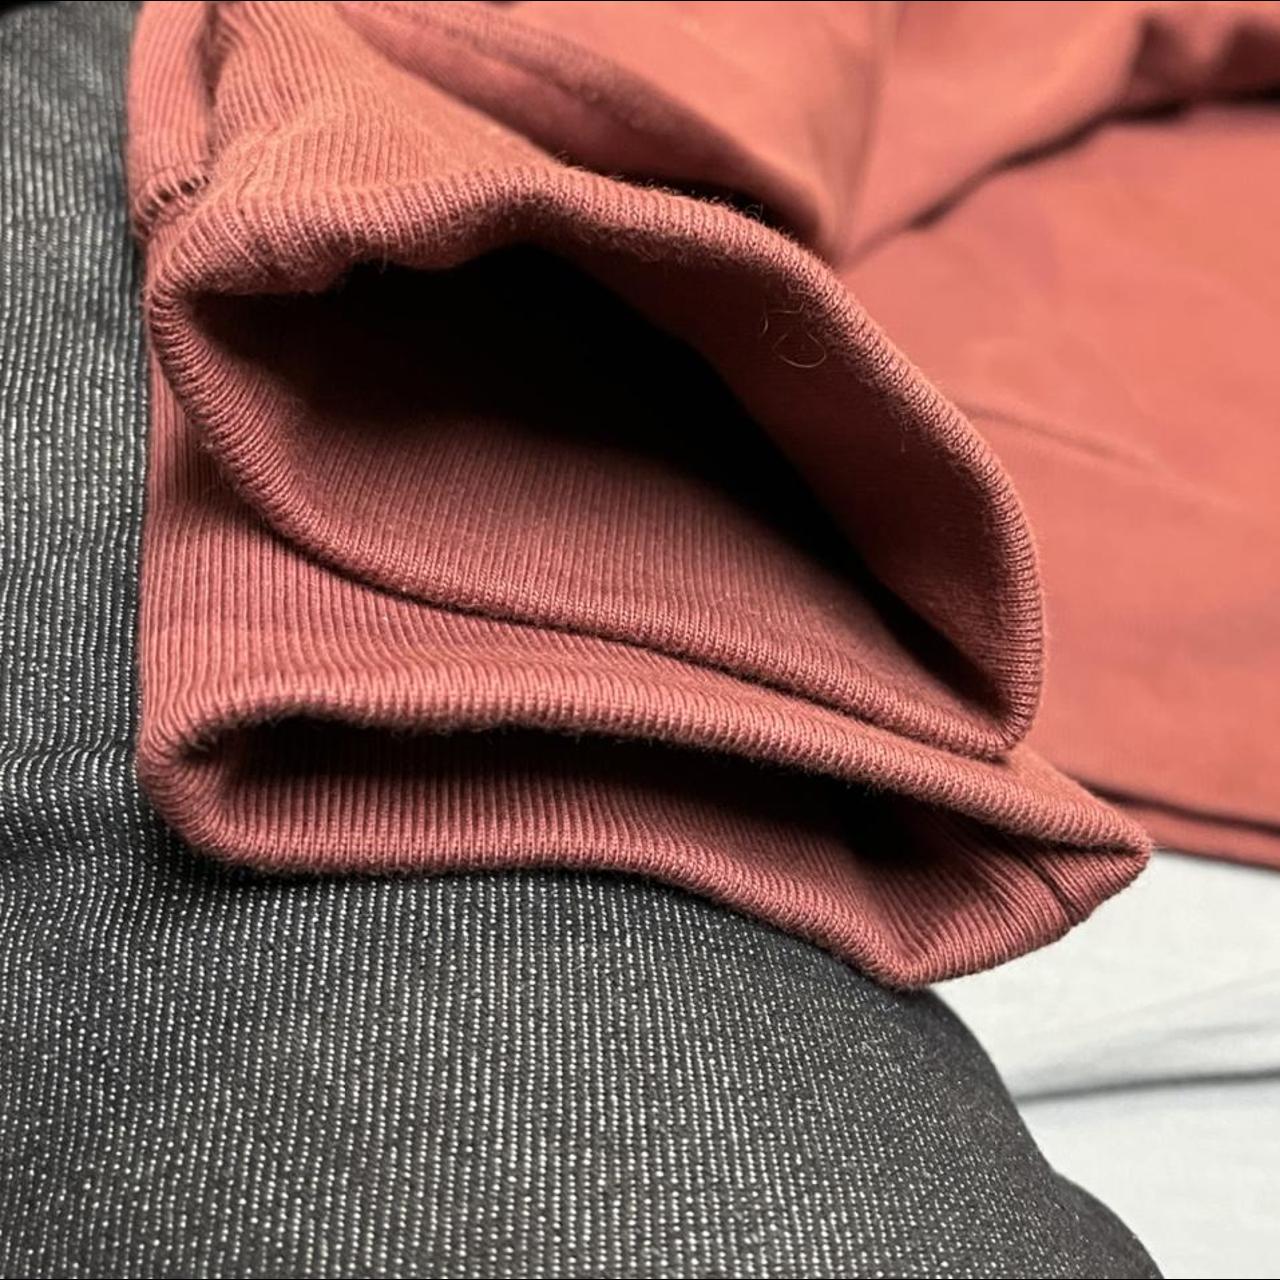 Product Image 2 - Patta hoodie size Medium
Brand New,